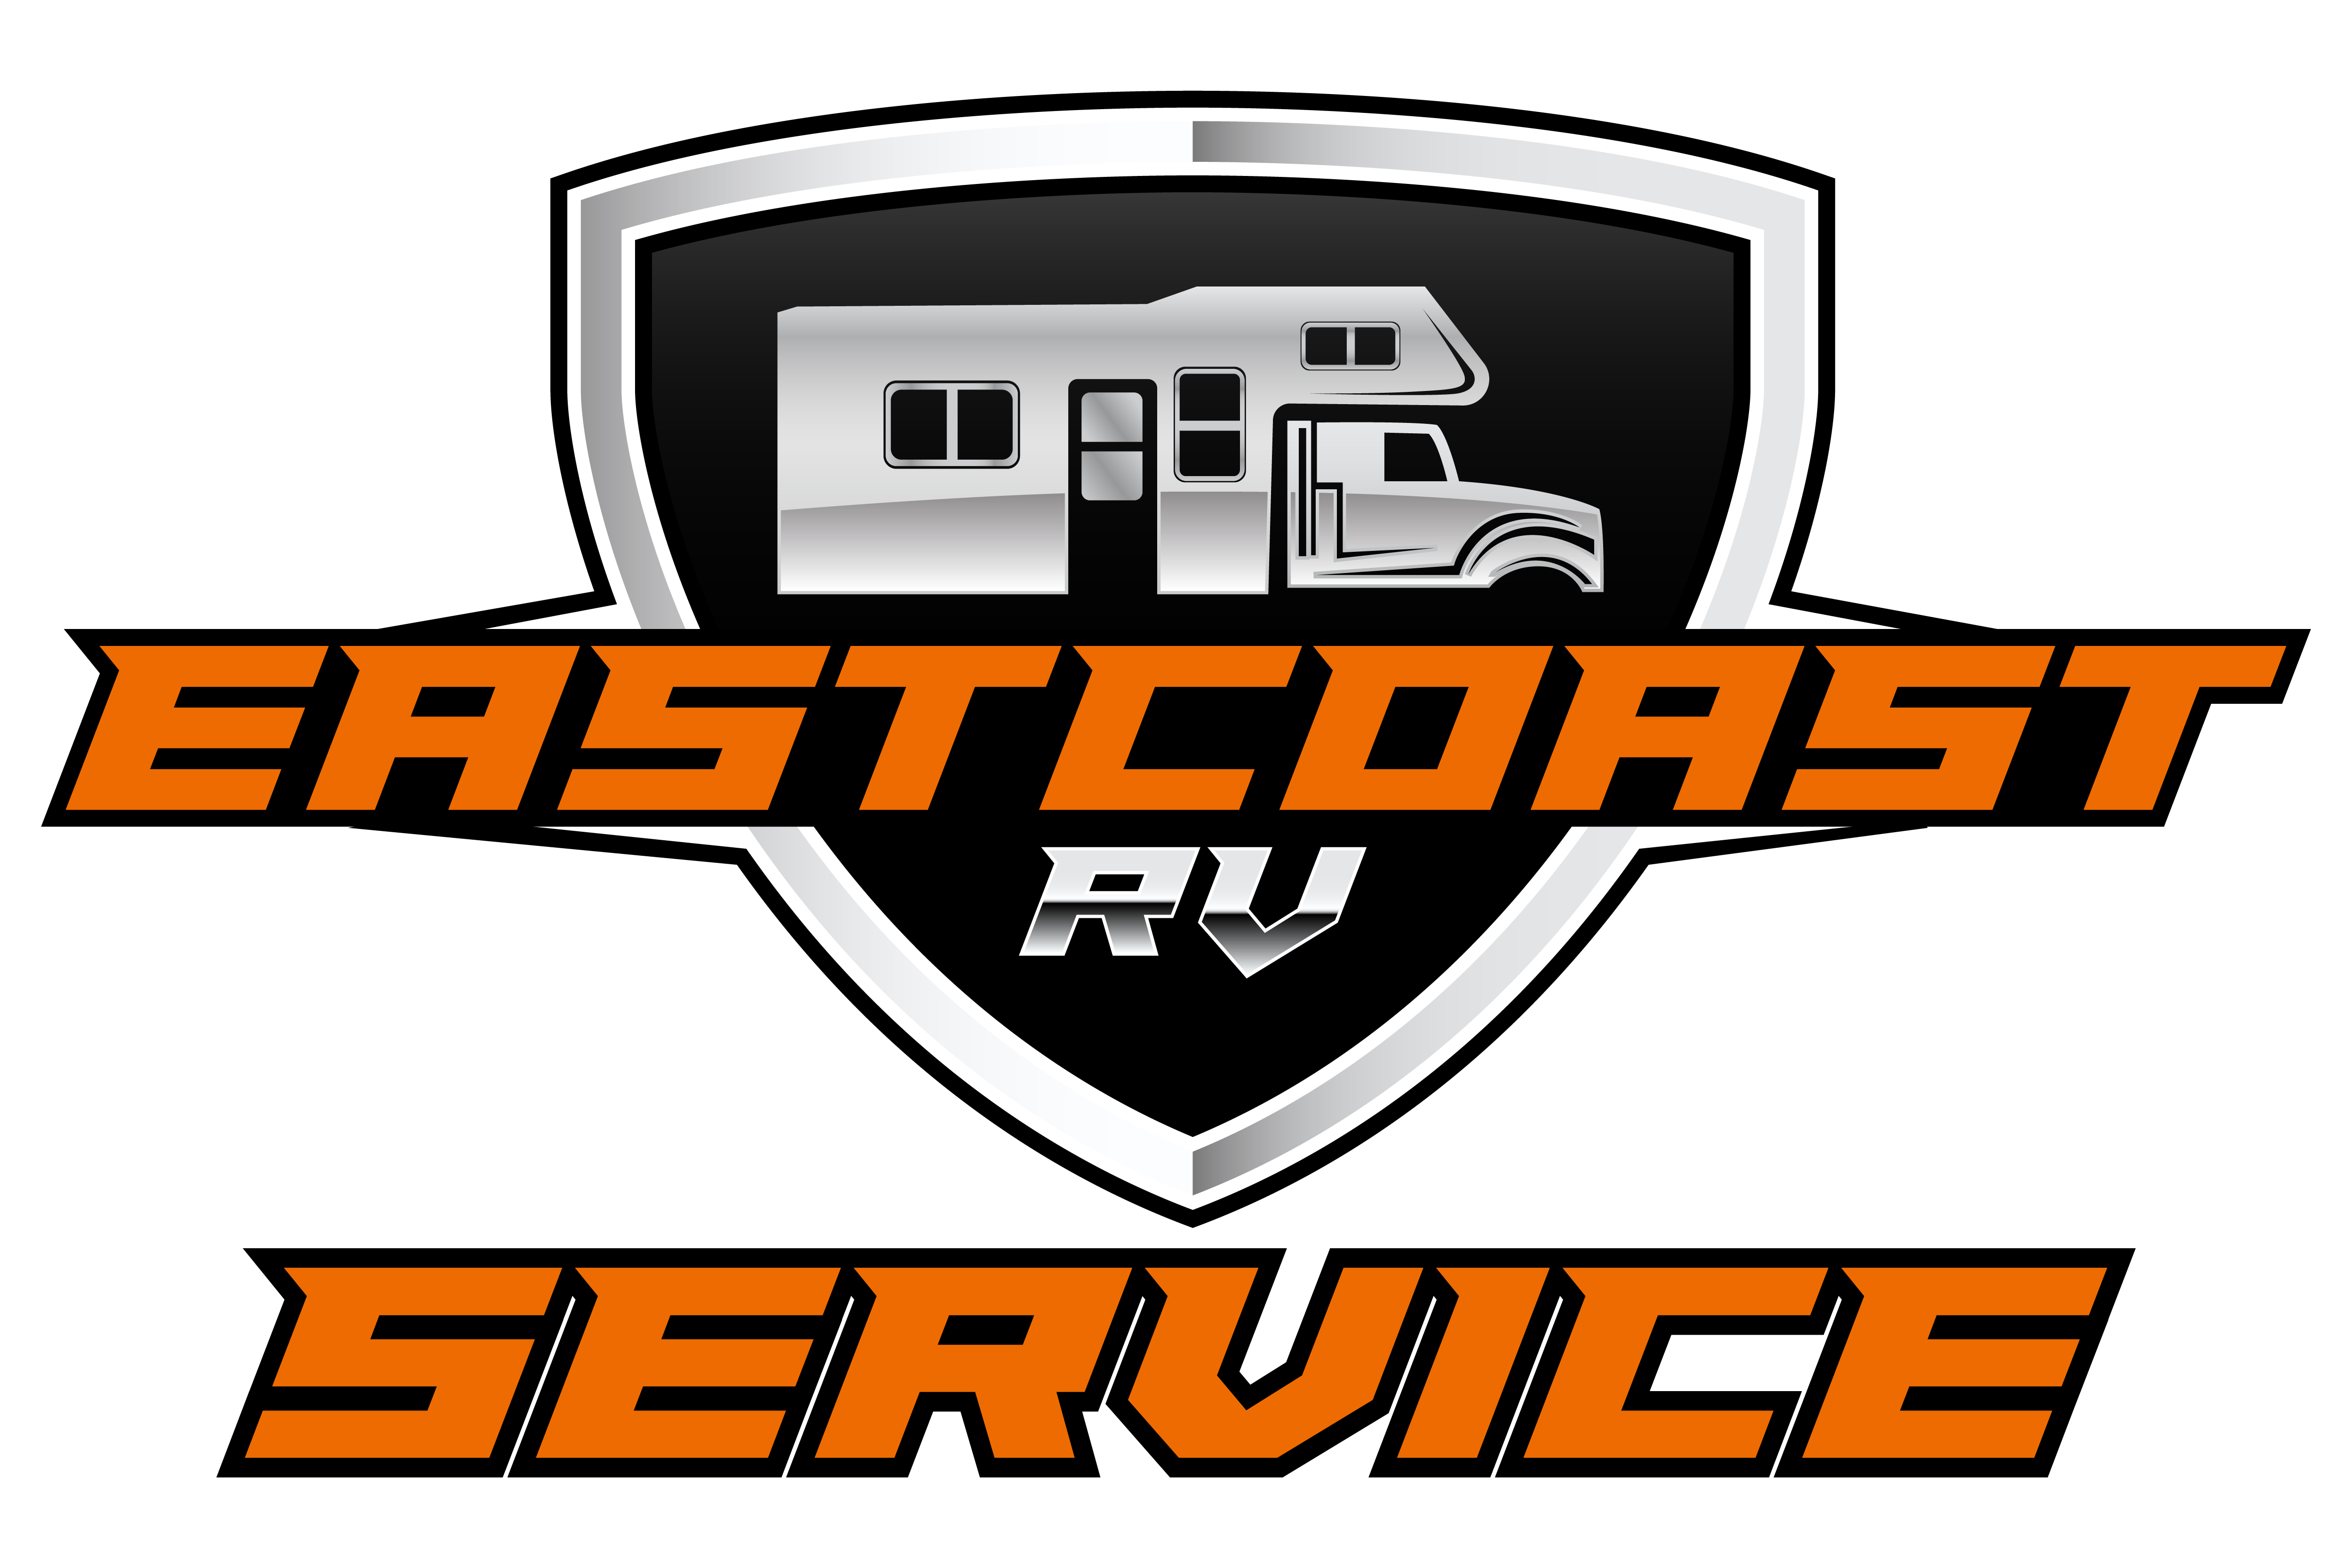 East Coast RV Service